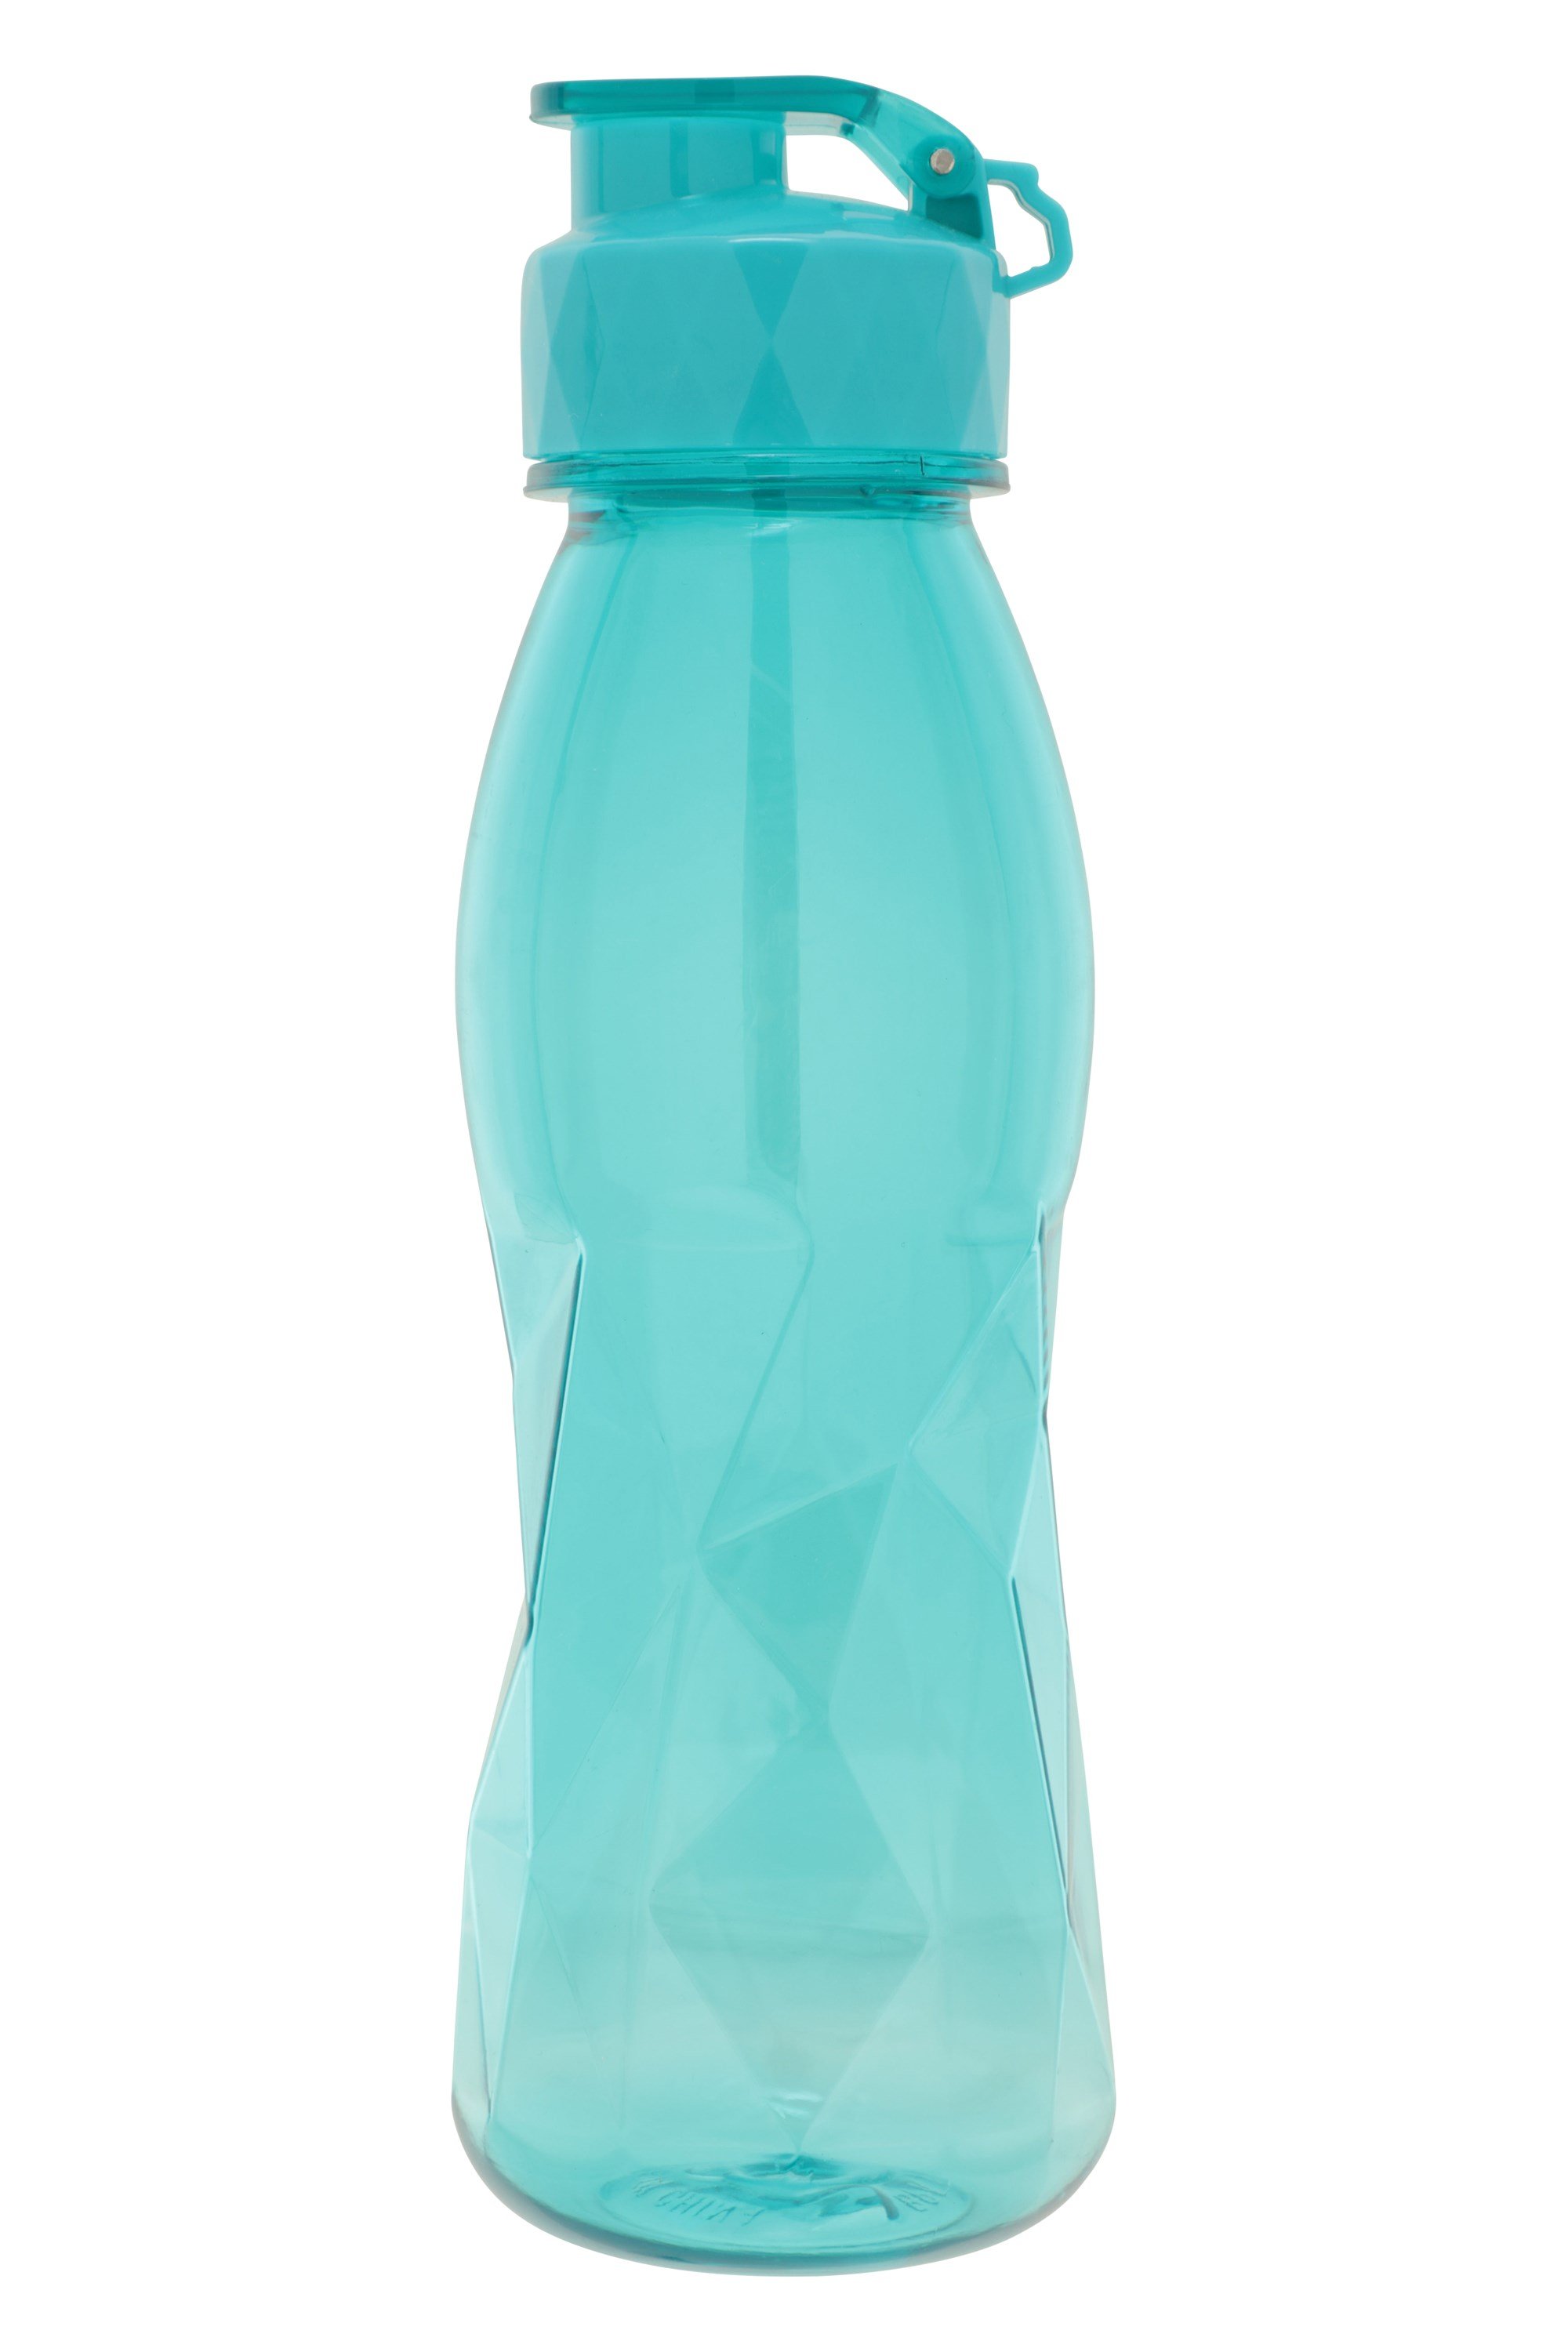 Diamond BPA-Free Plastic Water Bottle - 750ml - Teal